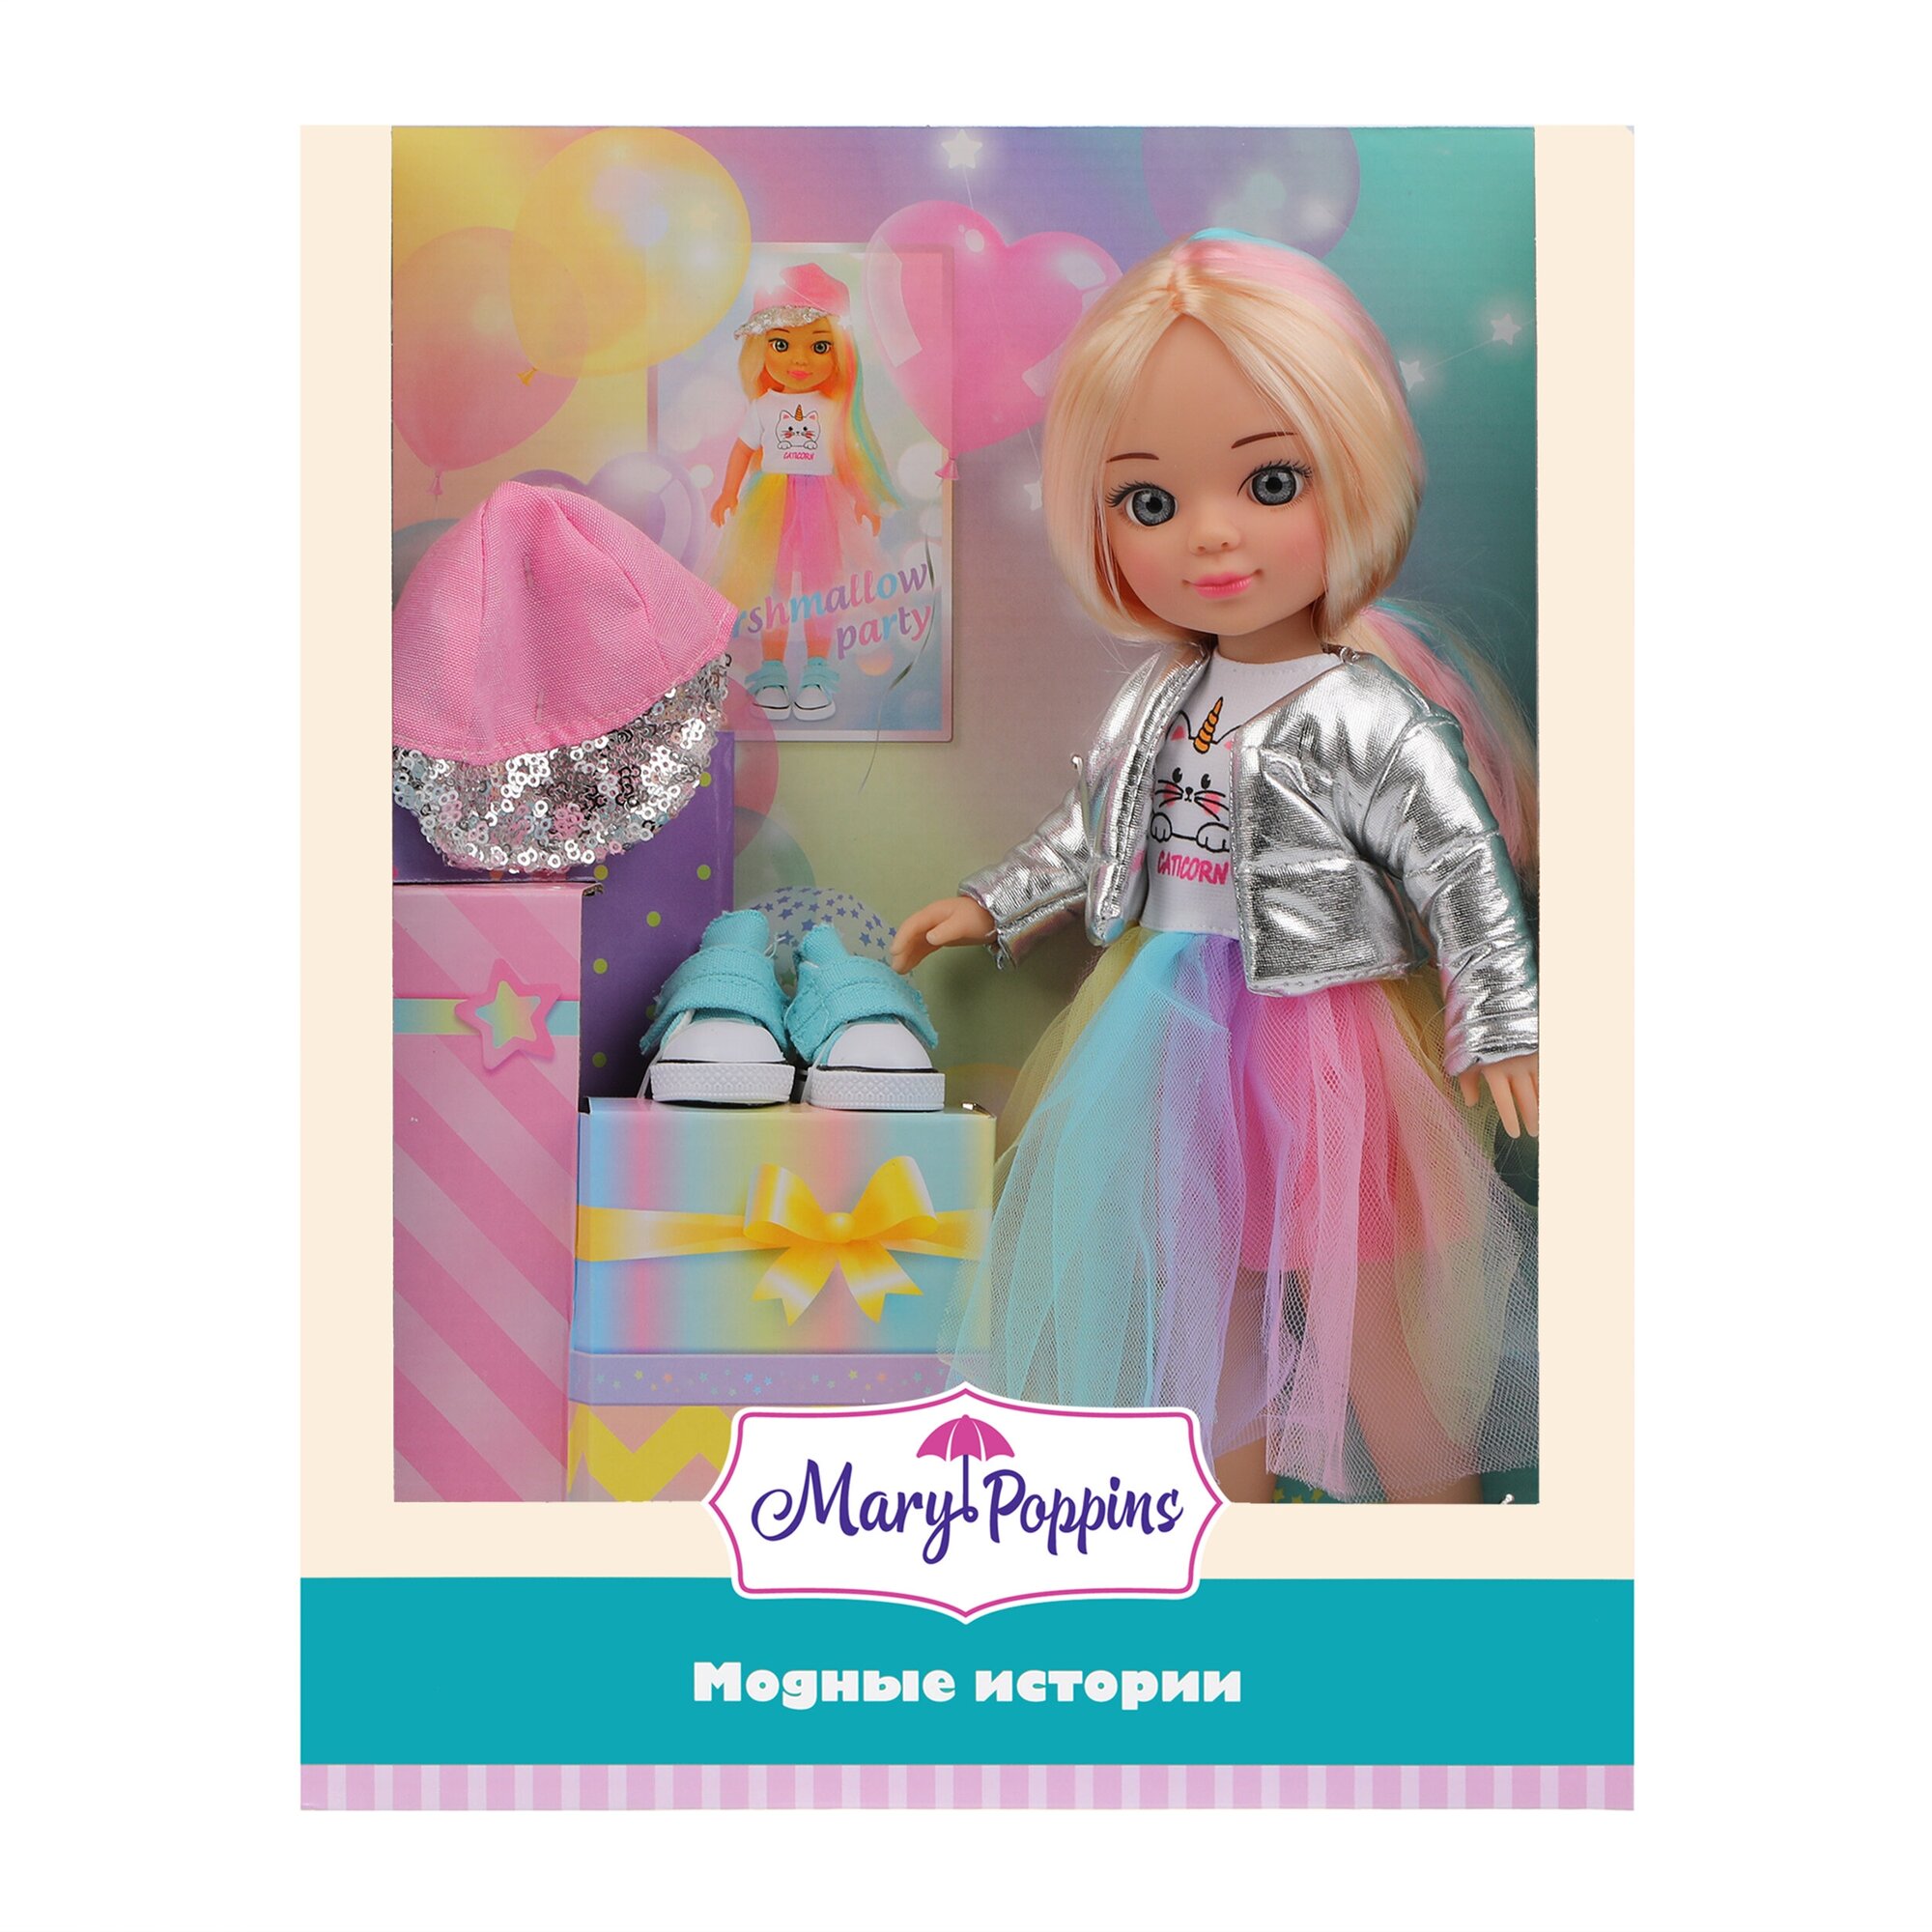 Кукла Mary Poppins 451348 31 см Модные истории Королева вечеринок